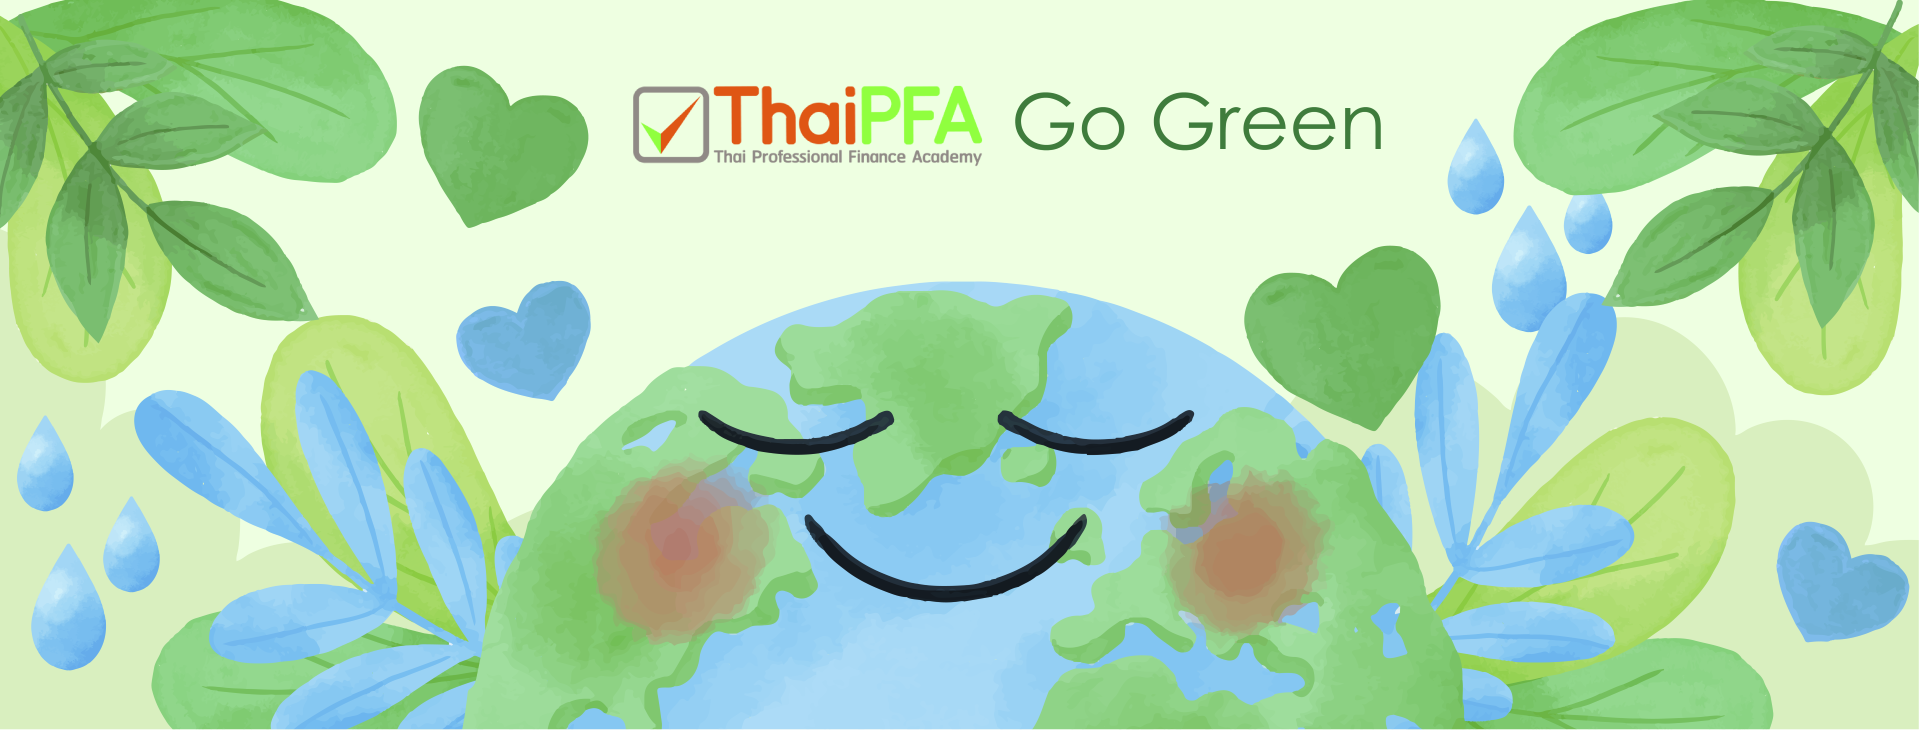 ThaiPFA on green